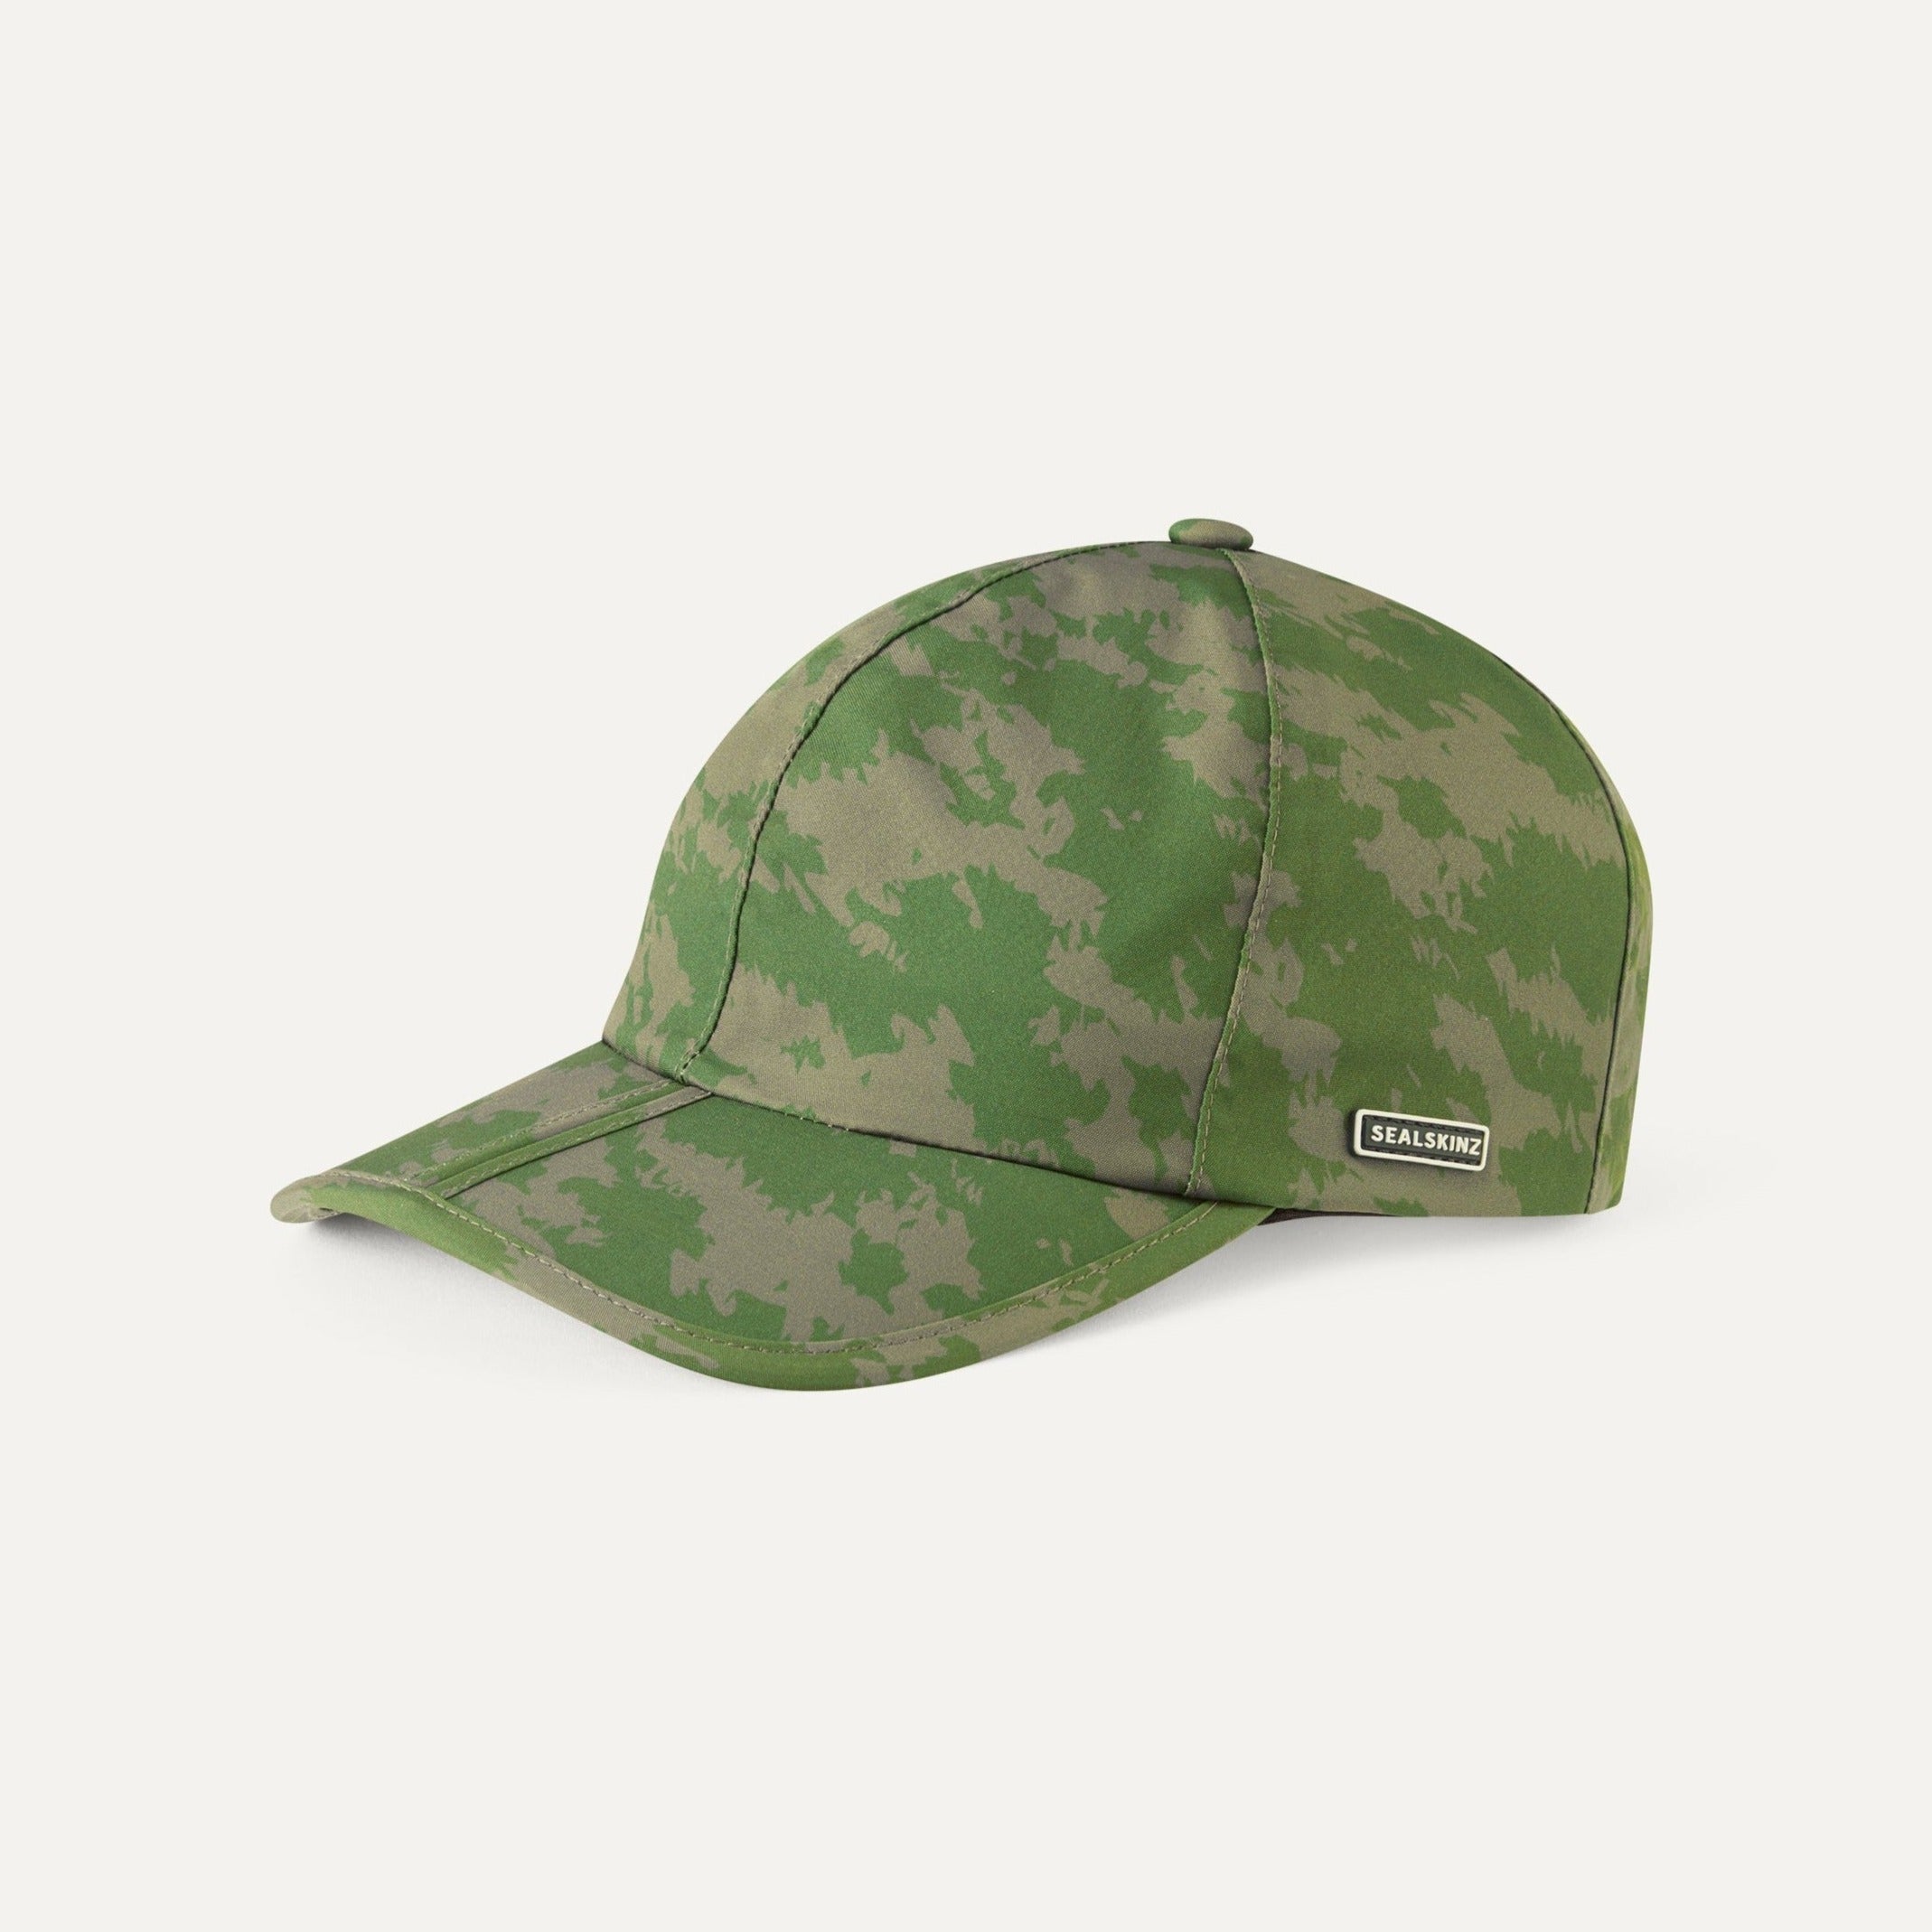 Mens Camouflage Military Caps 61cm, Camo Hats Men